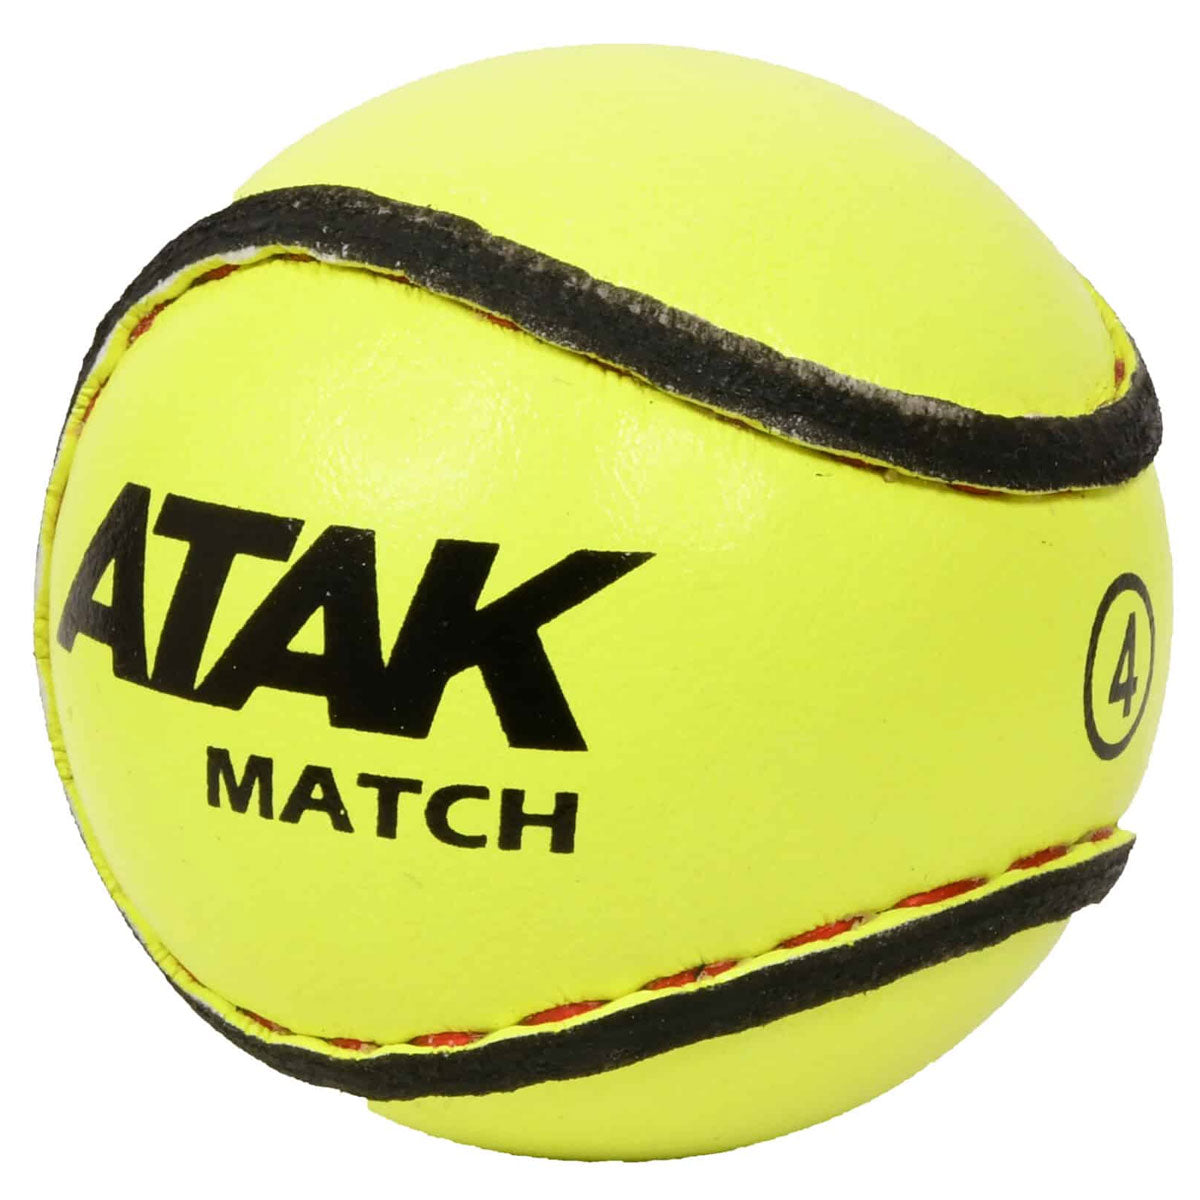 Atak Match Sliotar - Size 4 - Neon Yellow